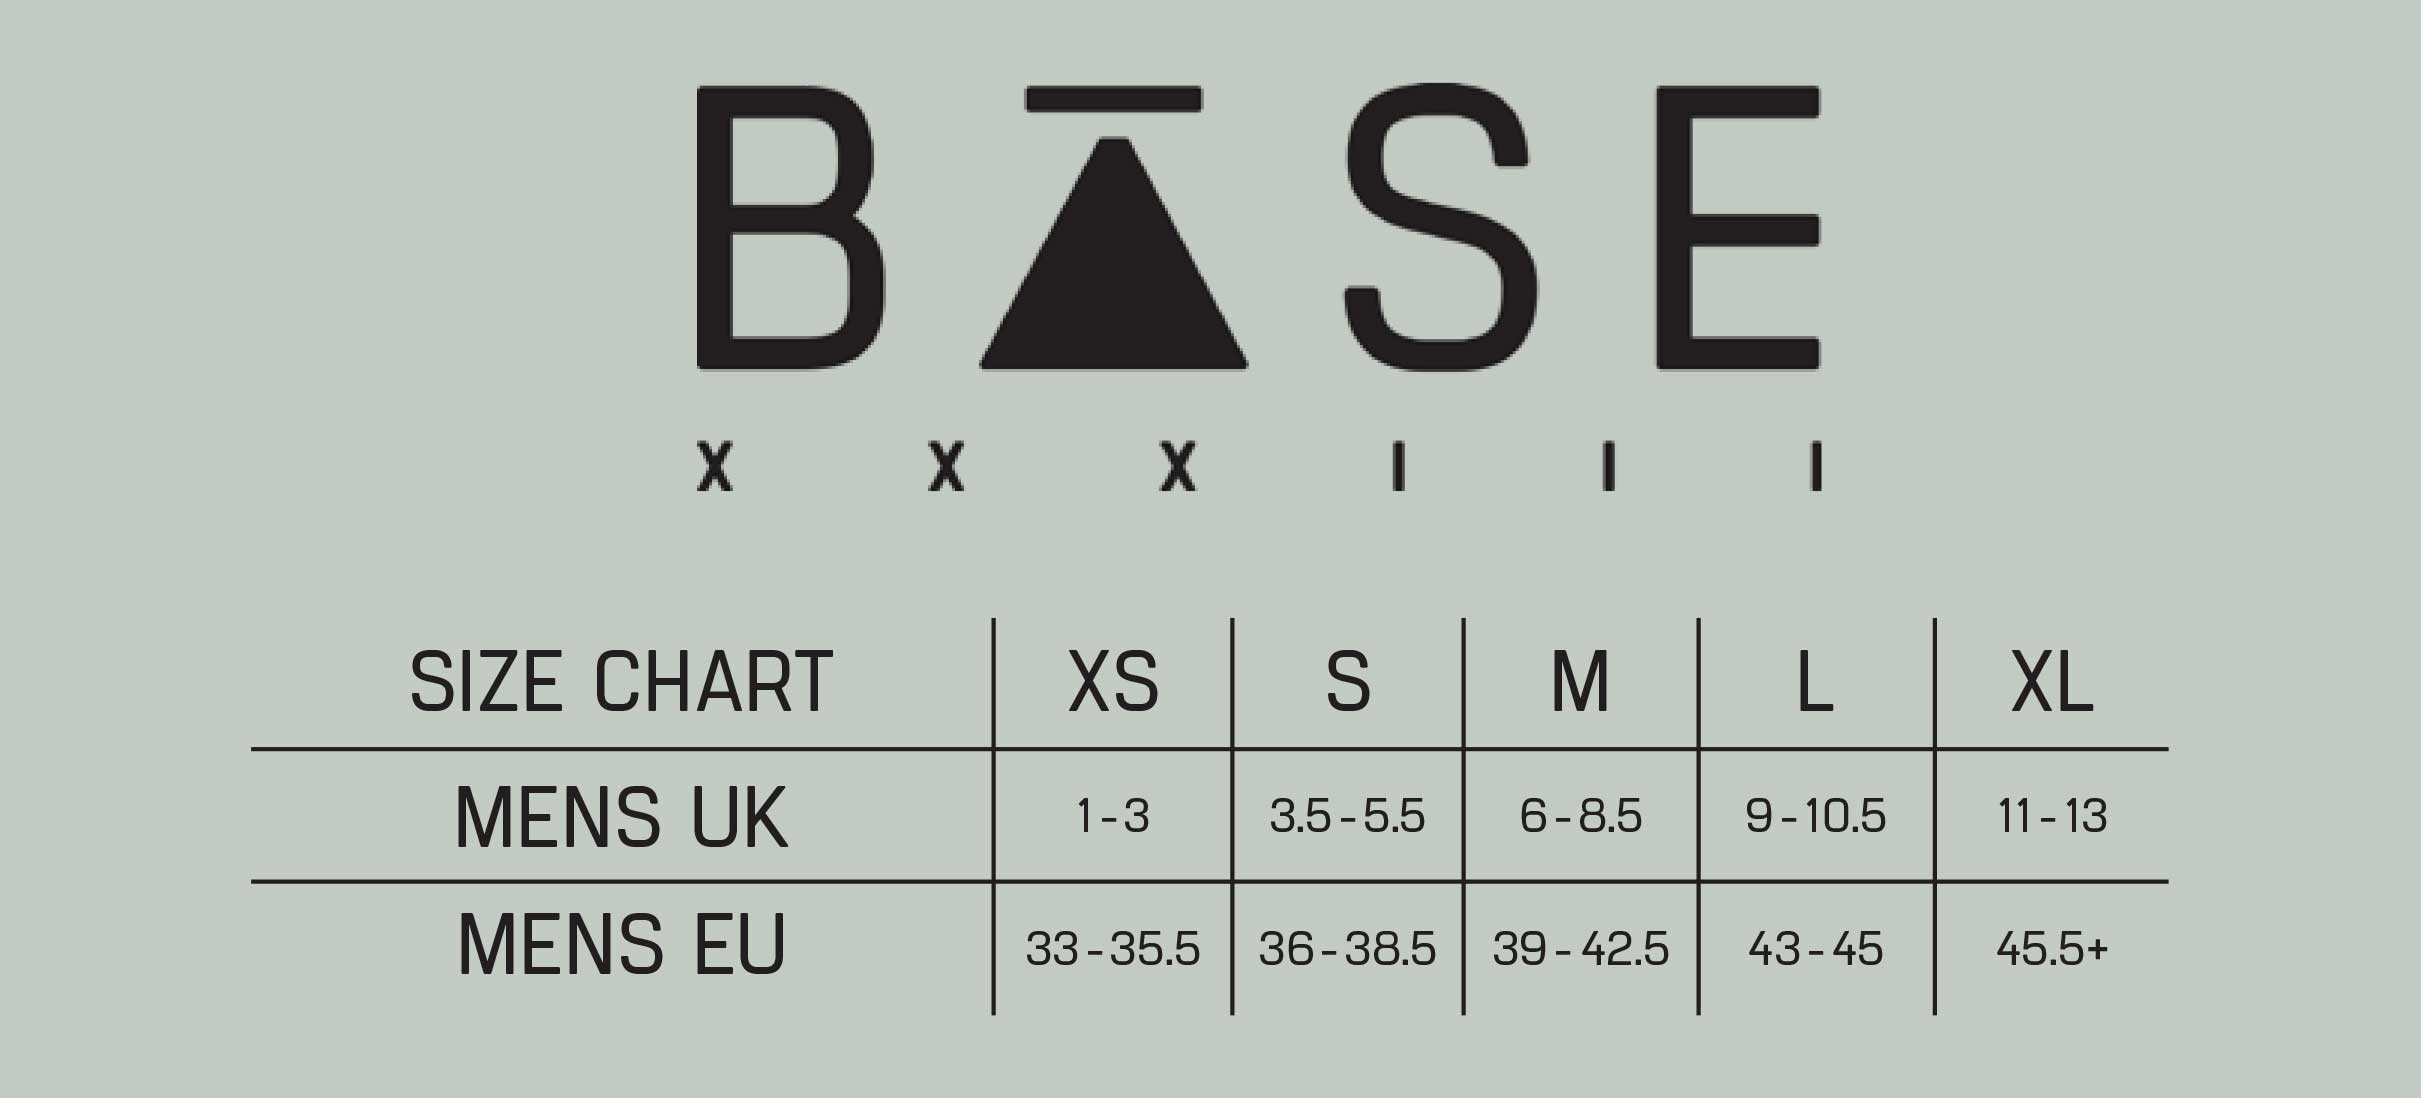 Base 33 socks size chart